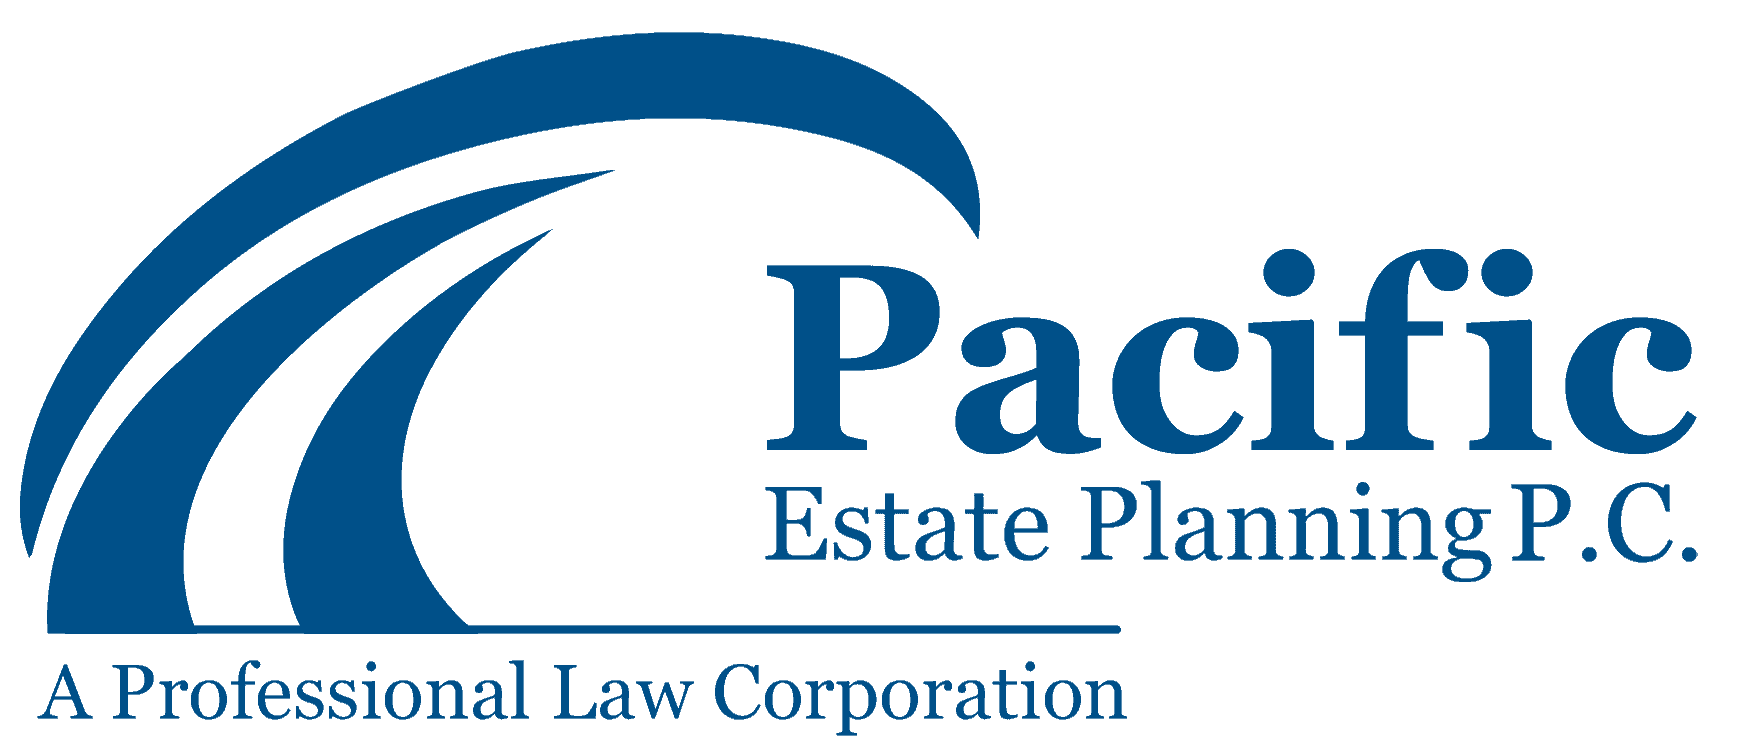 Pacific Estate Planning